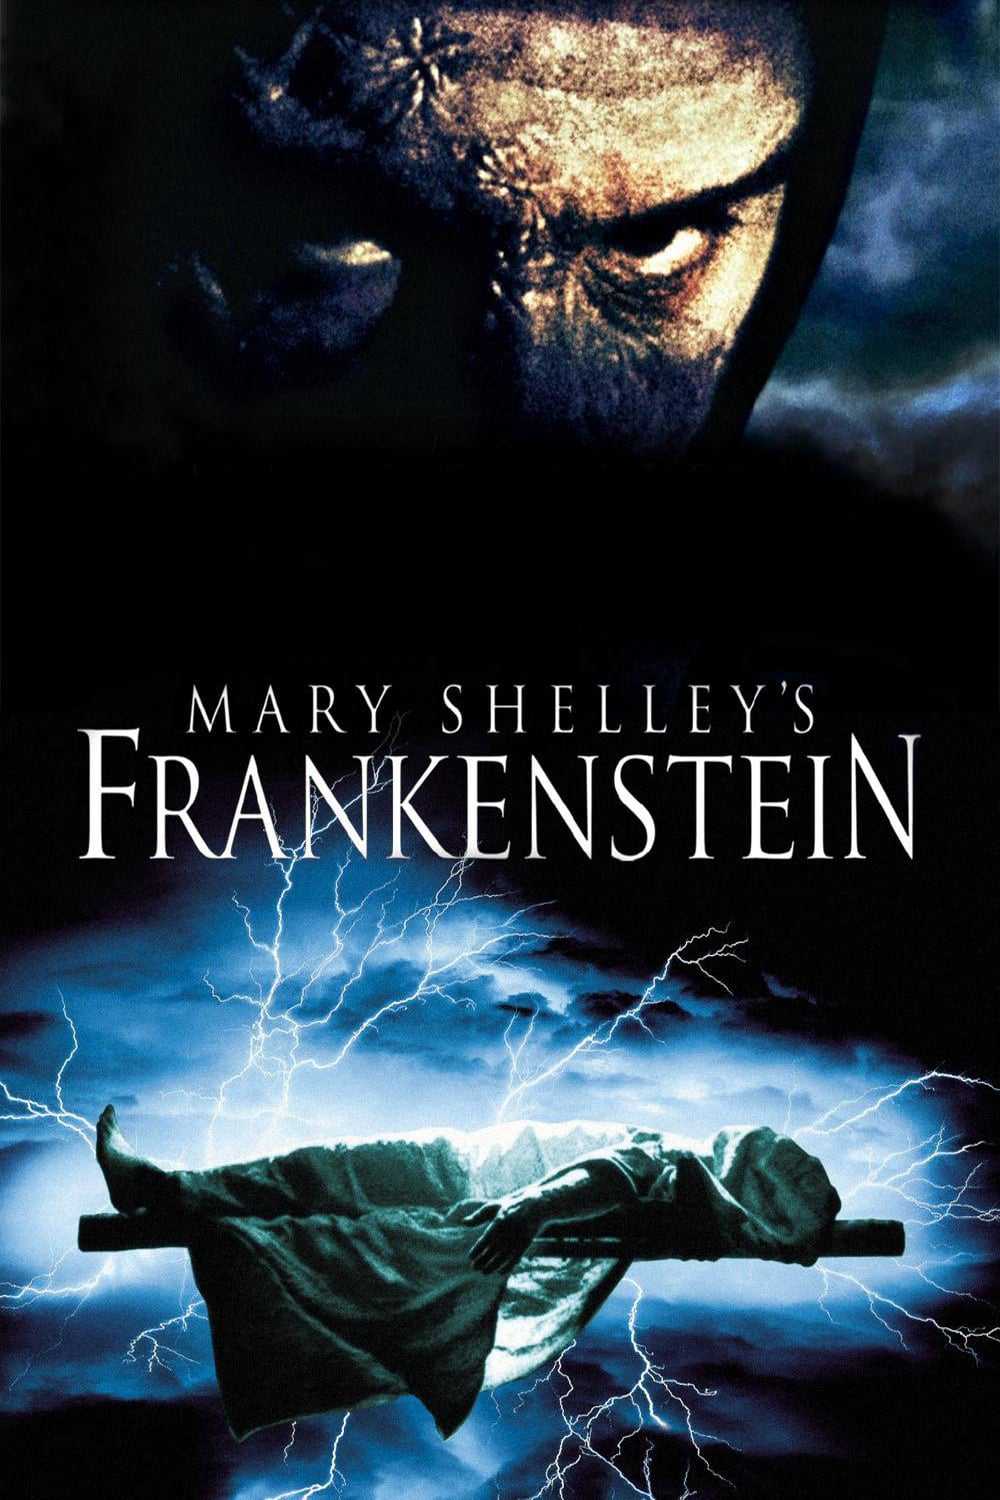 Mary shelley's frankenstein - Mary shelley's frankenstein